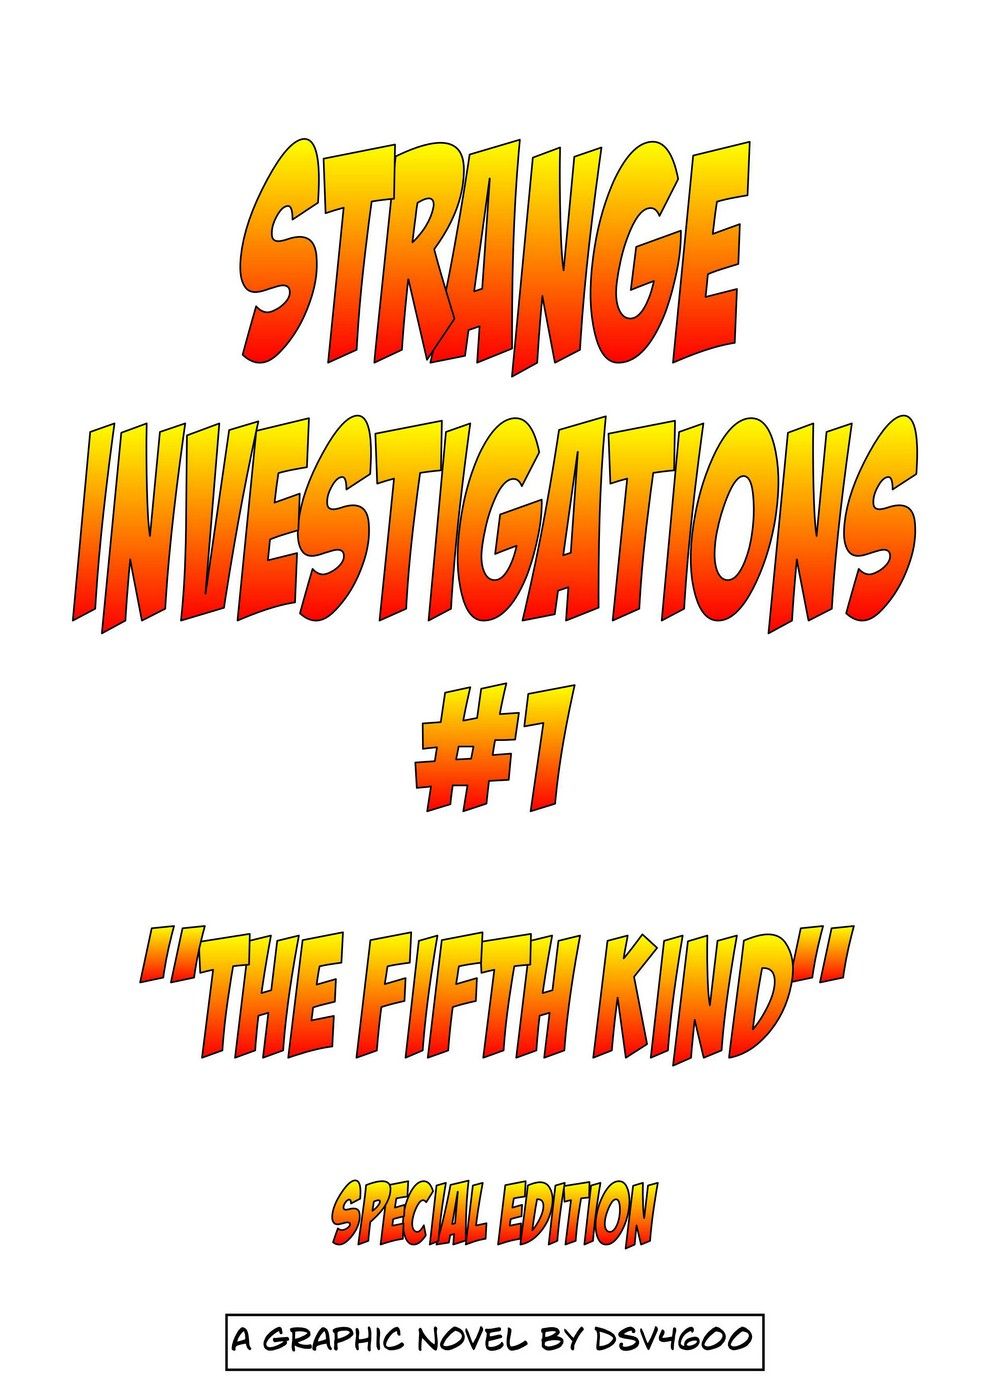 Strange Investigations - Special Edition [DSV4600] page 8